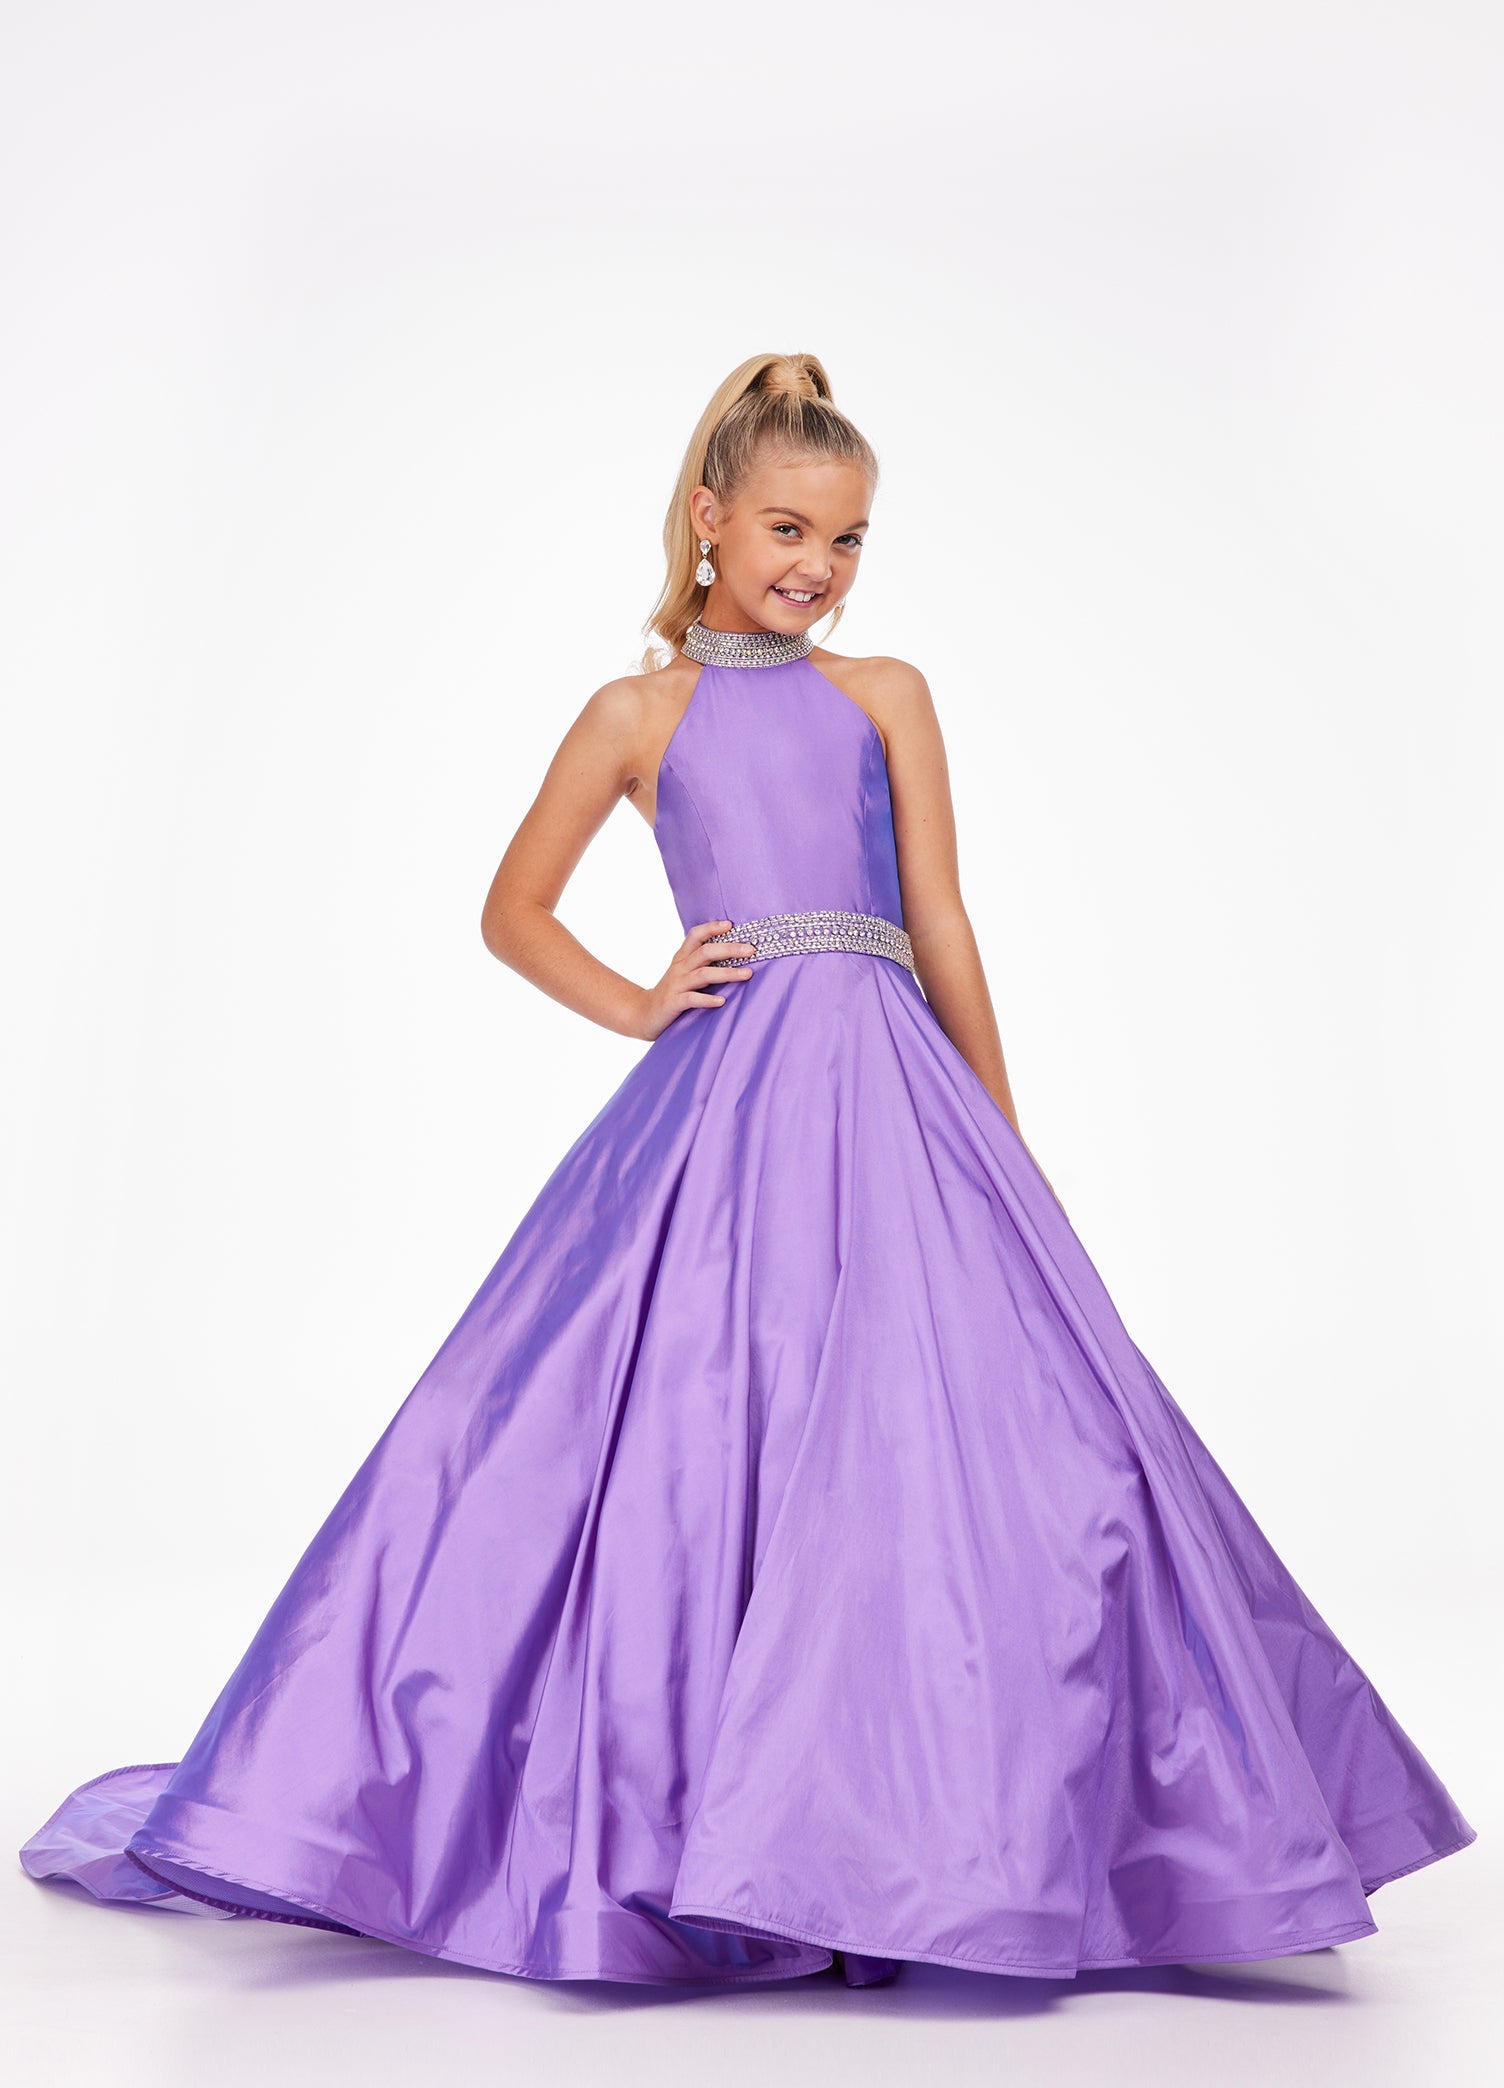 Beautiful Pageant Girl Dress | Girls National Pageant Dress - Blush Kids  Luxury Couture